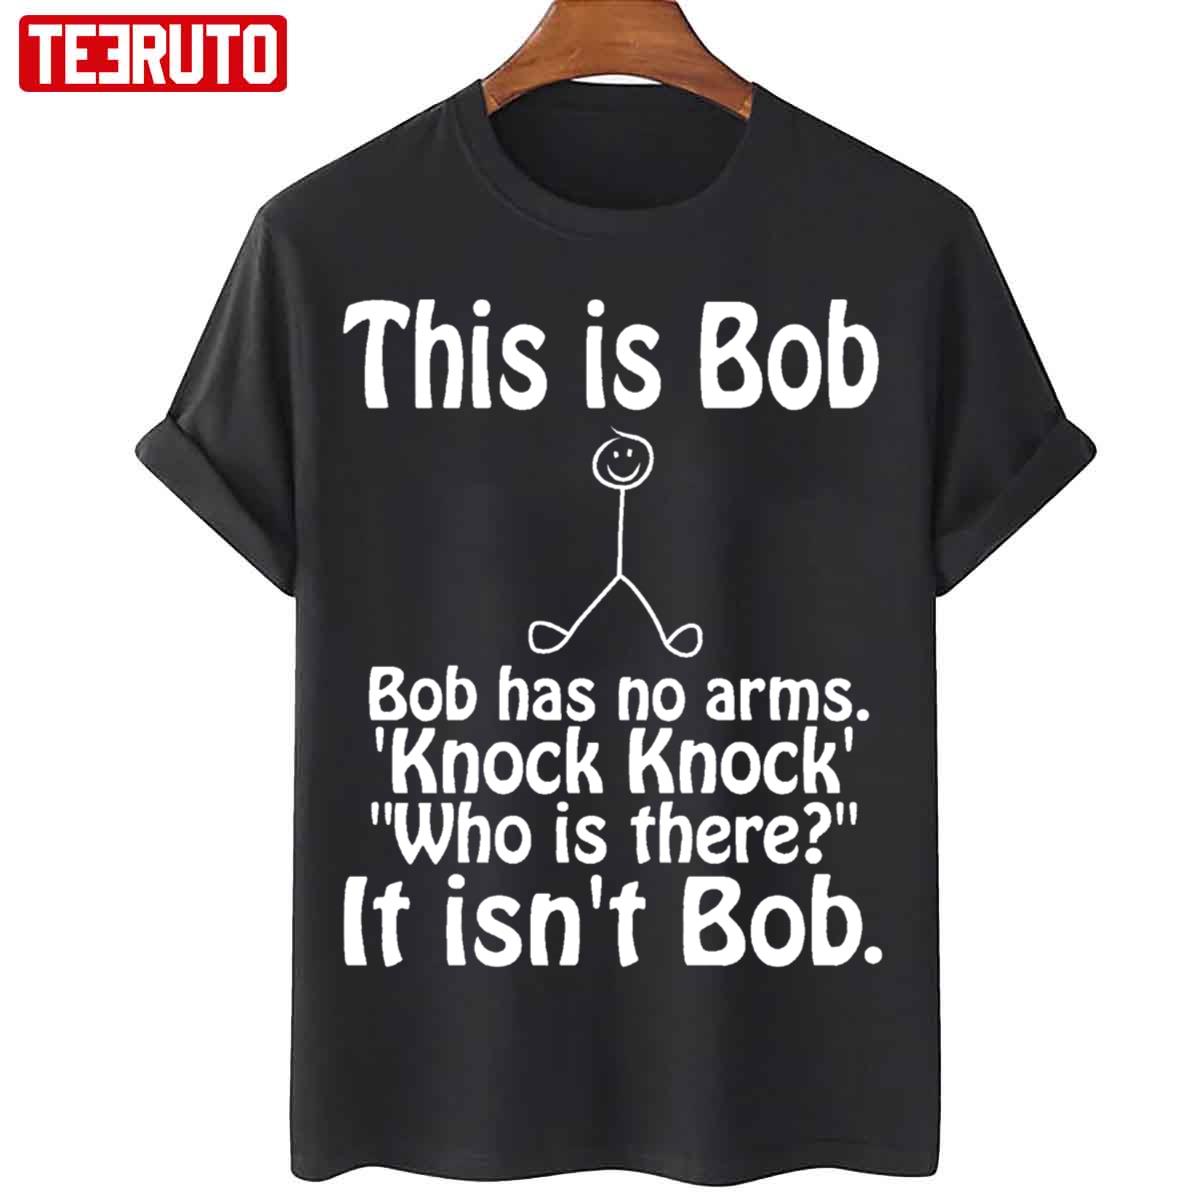 This Is Bob Funny Bob Has No Arms Knock Knock Joke It Isn't Bob Unisex Sweatshirt